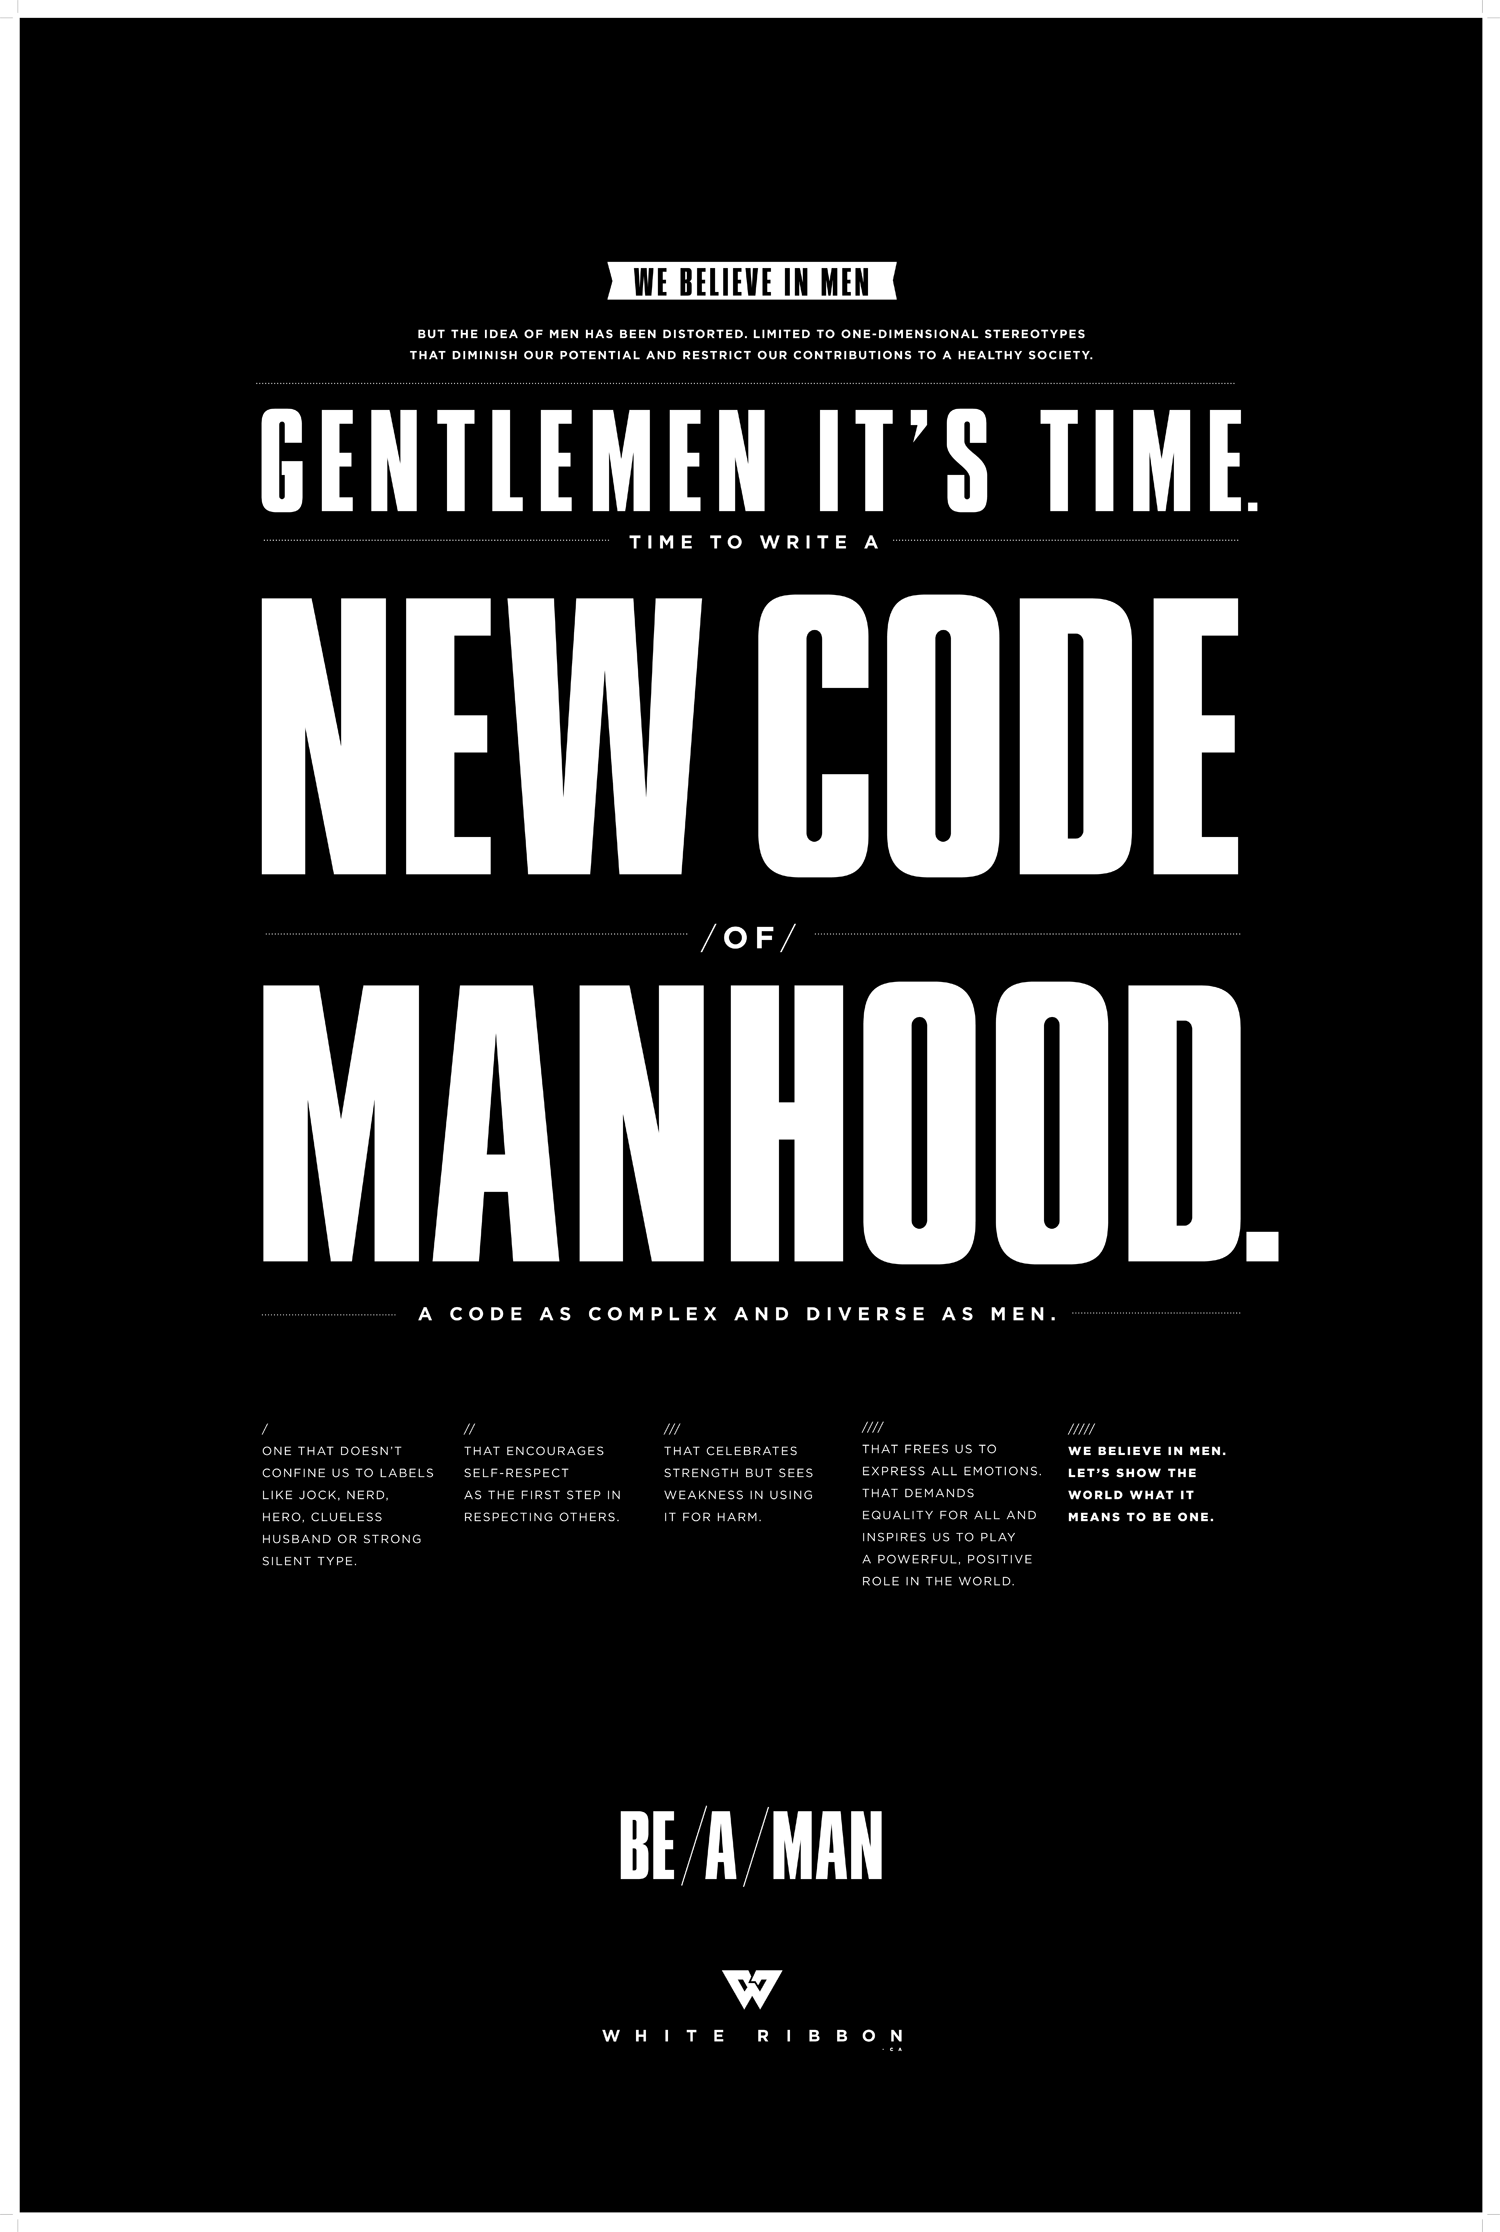 New code of manhood